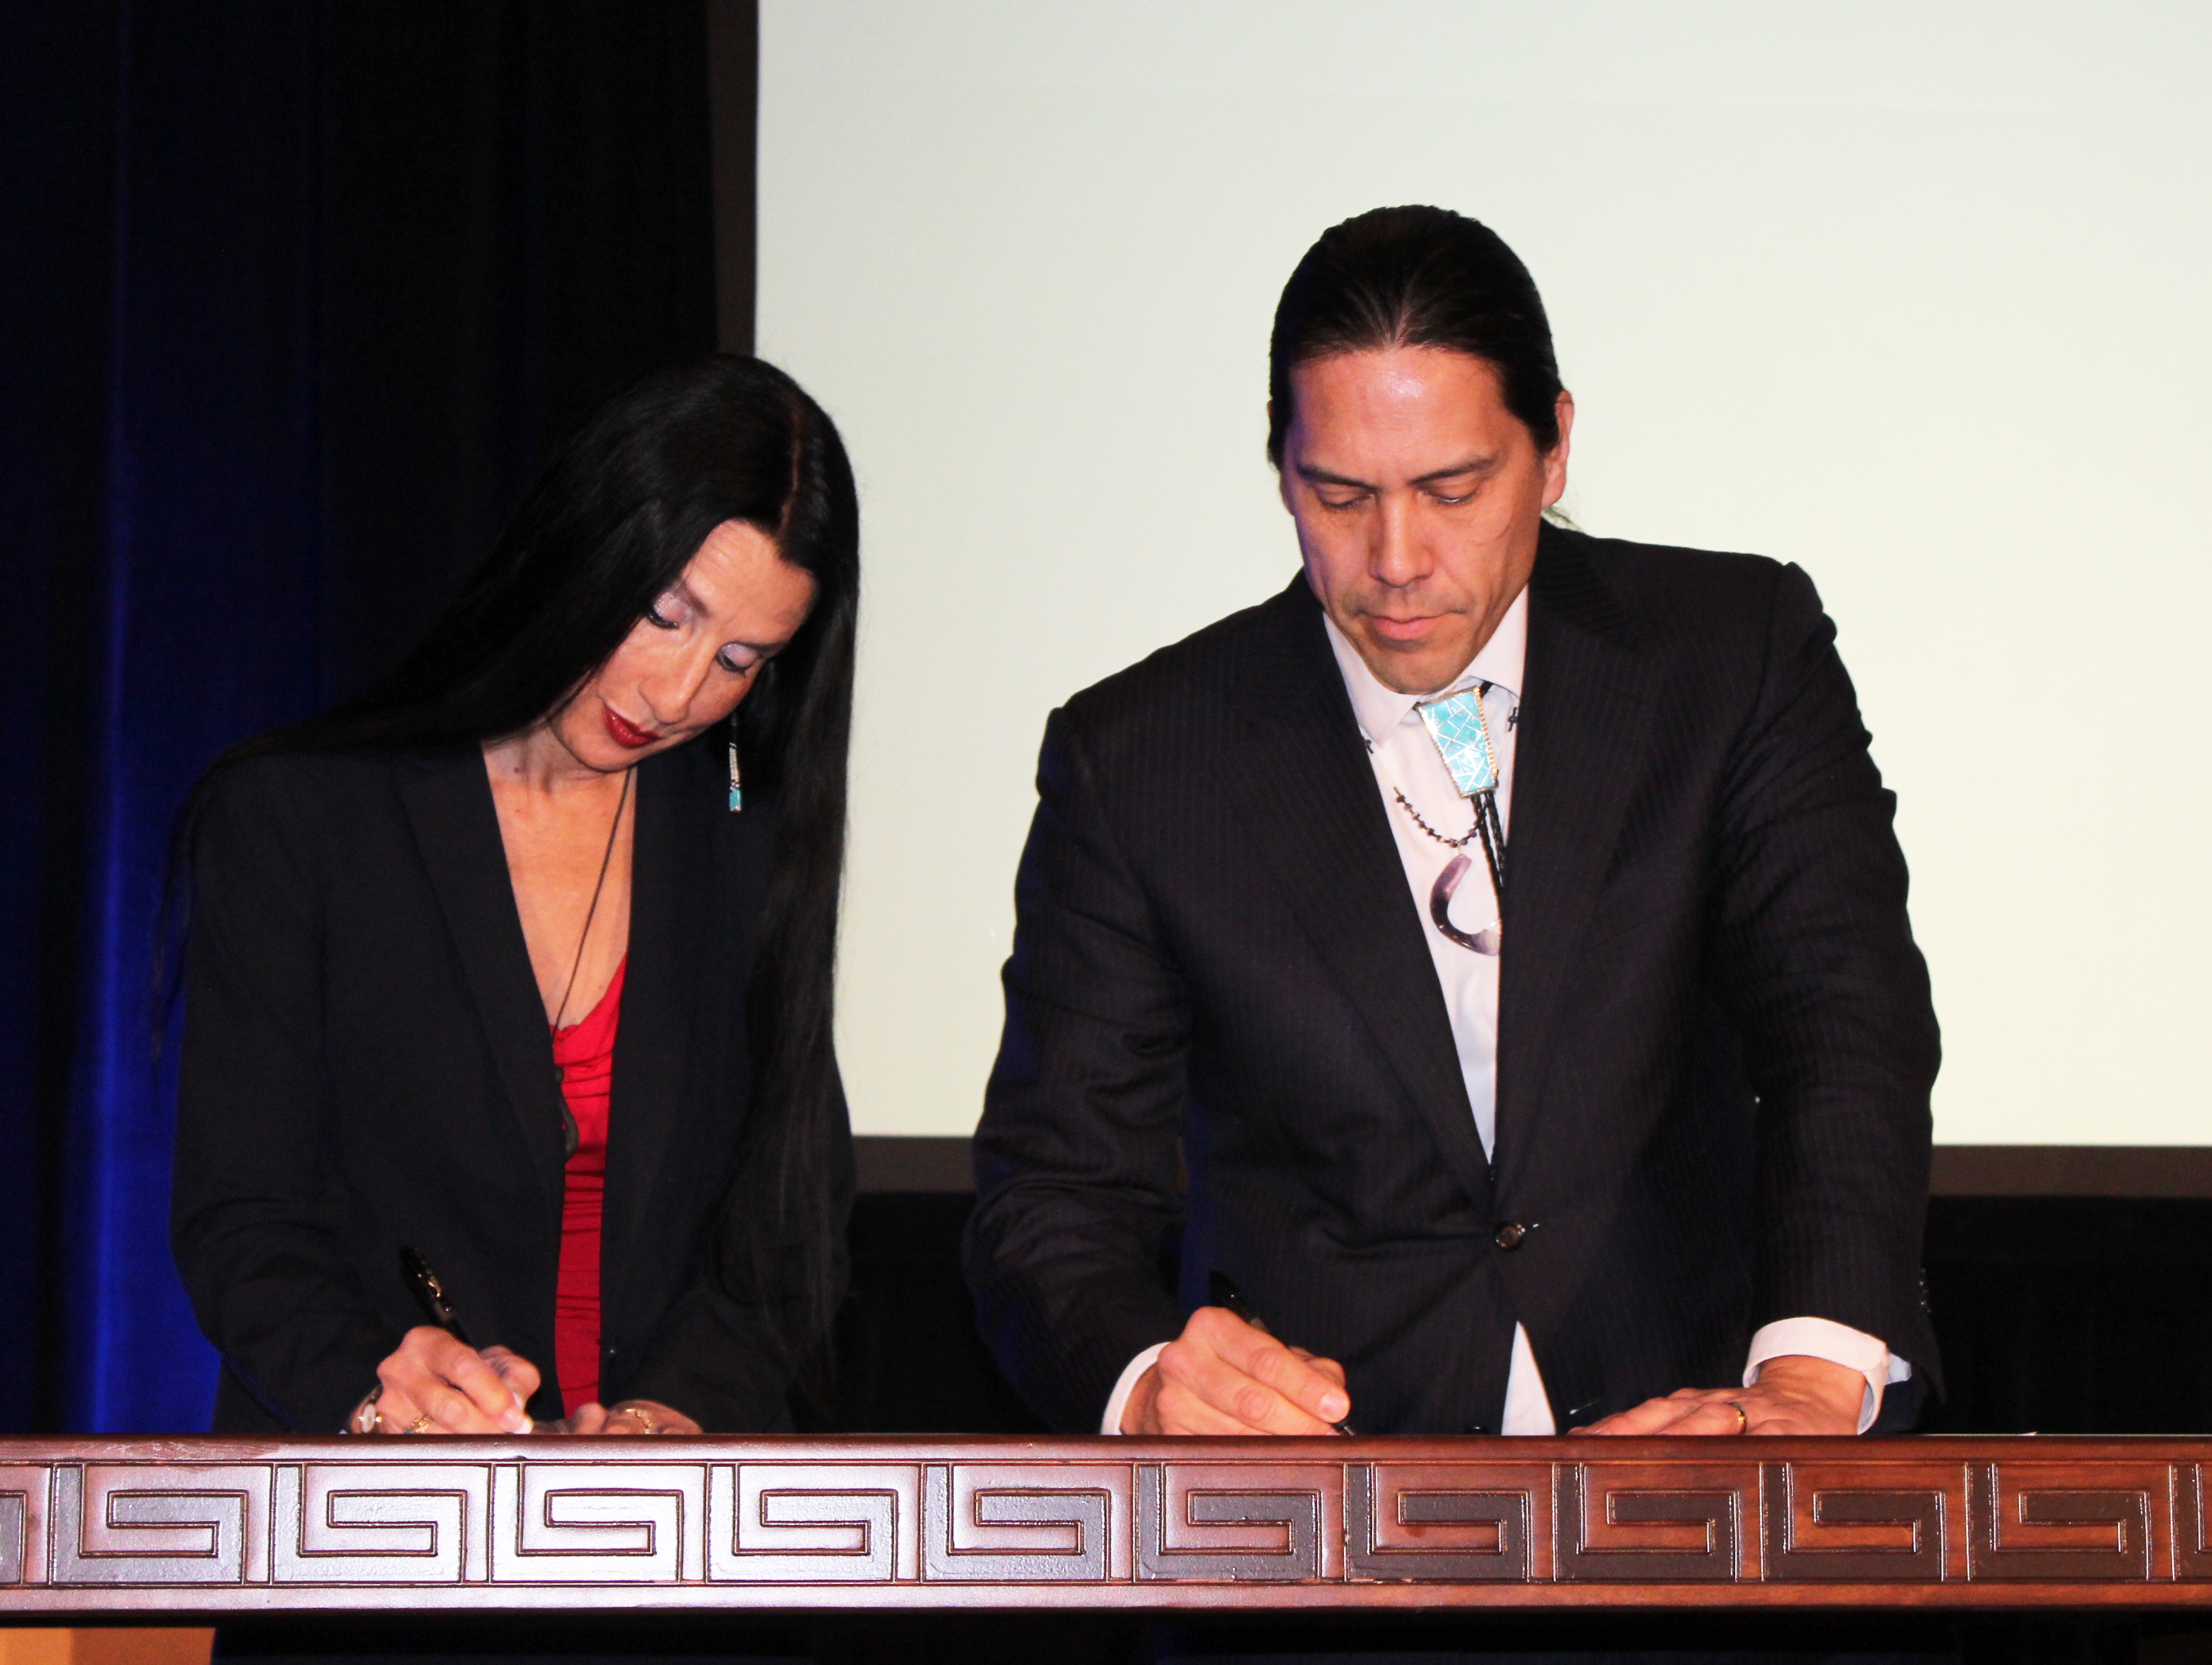 ASU-NAFOA Collaborative Agreement Signing